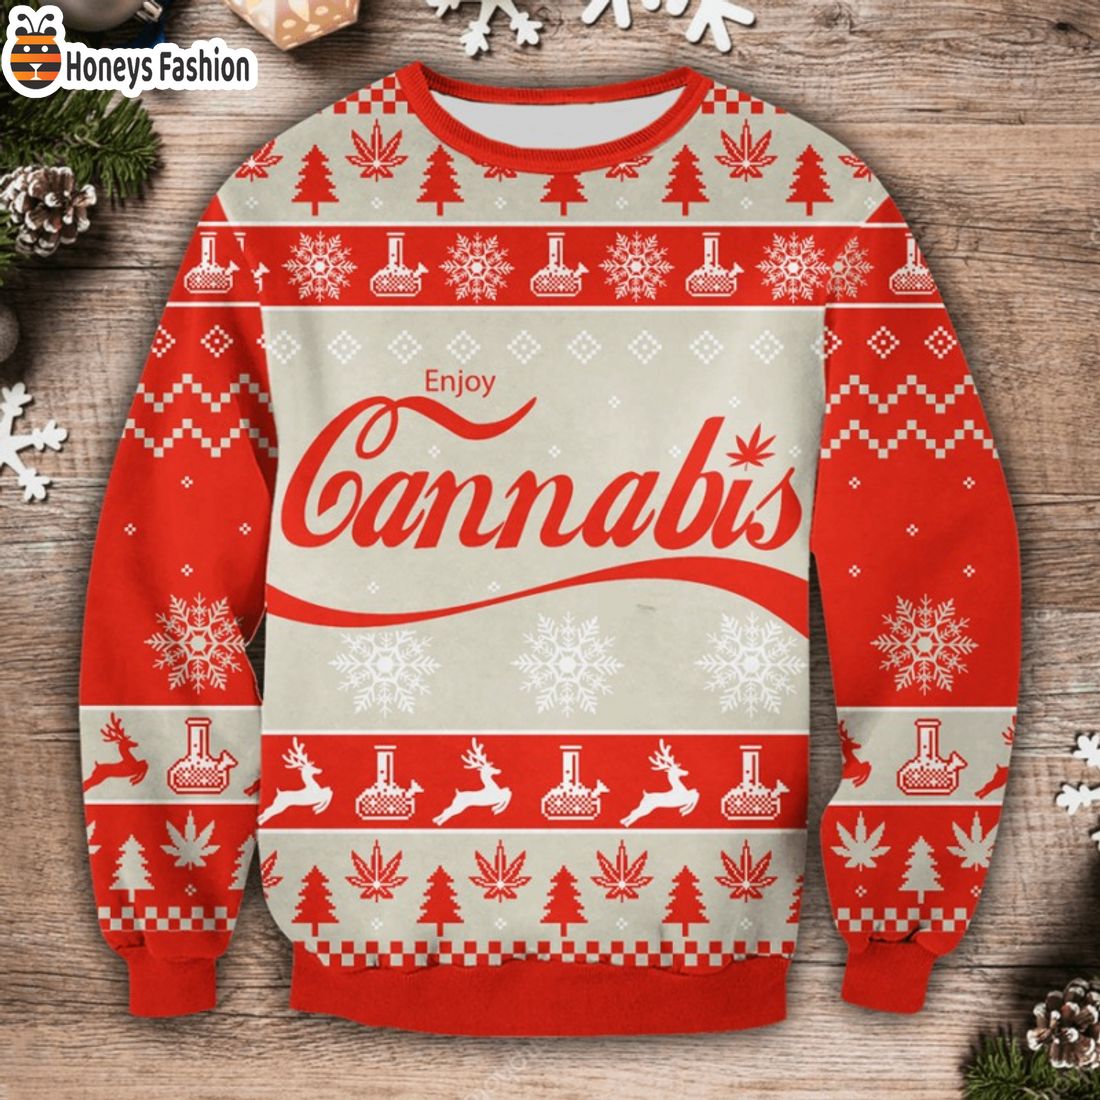 Enjoy Cannabis Ugly Christmas Sweater